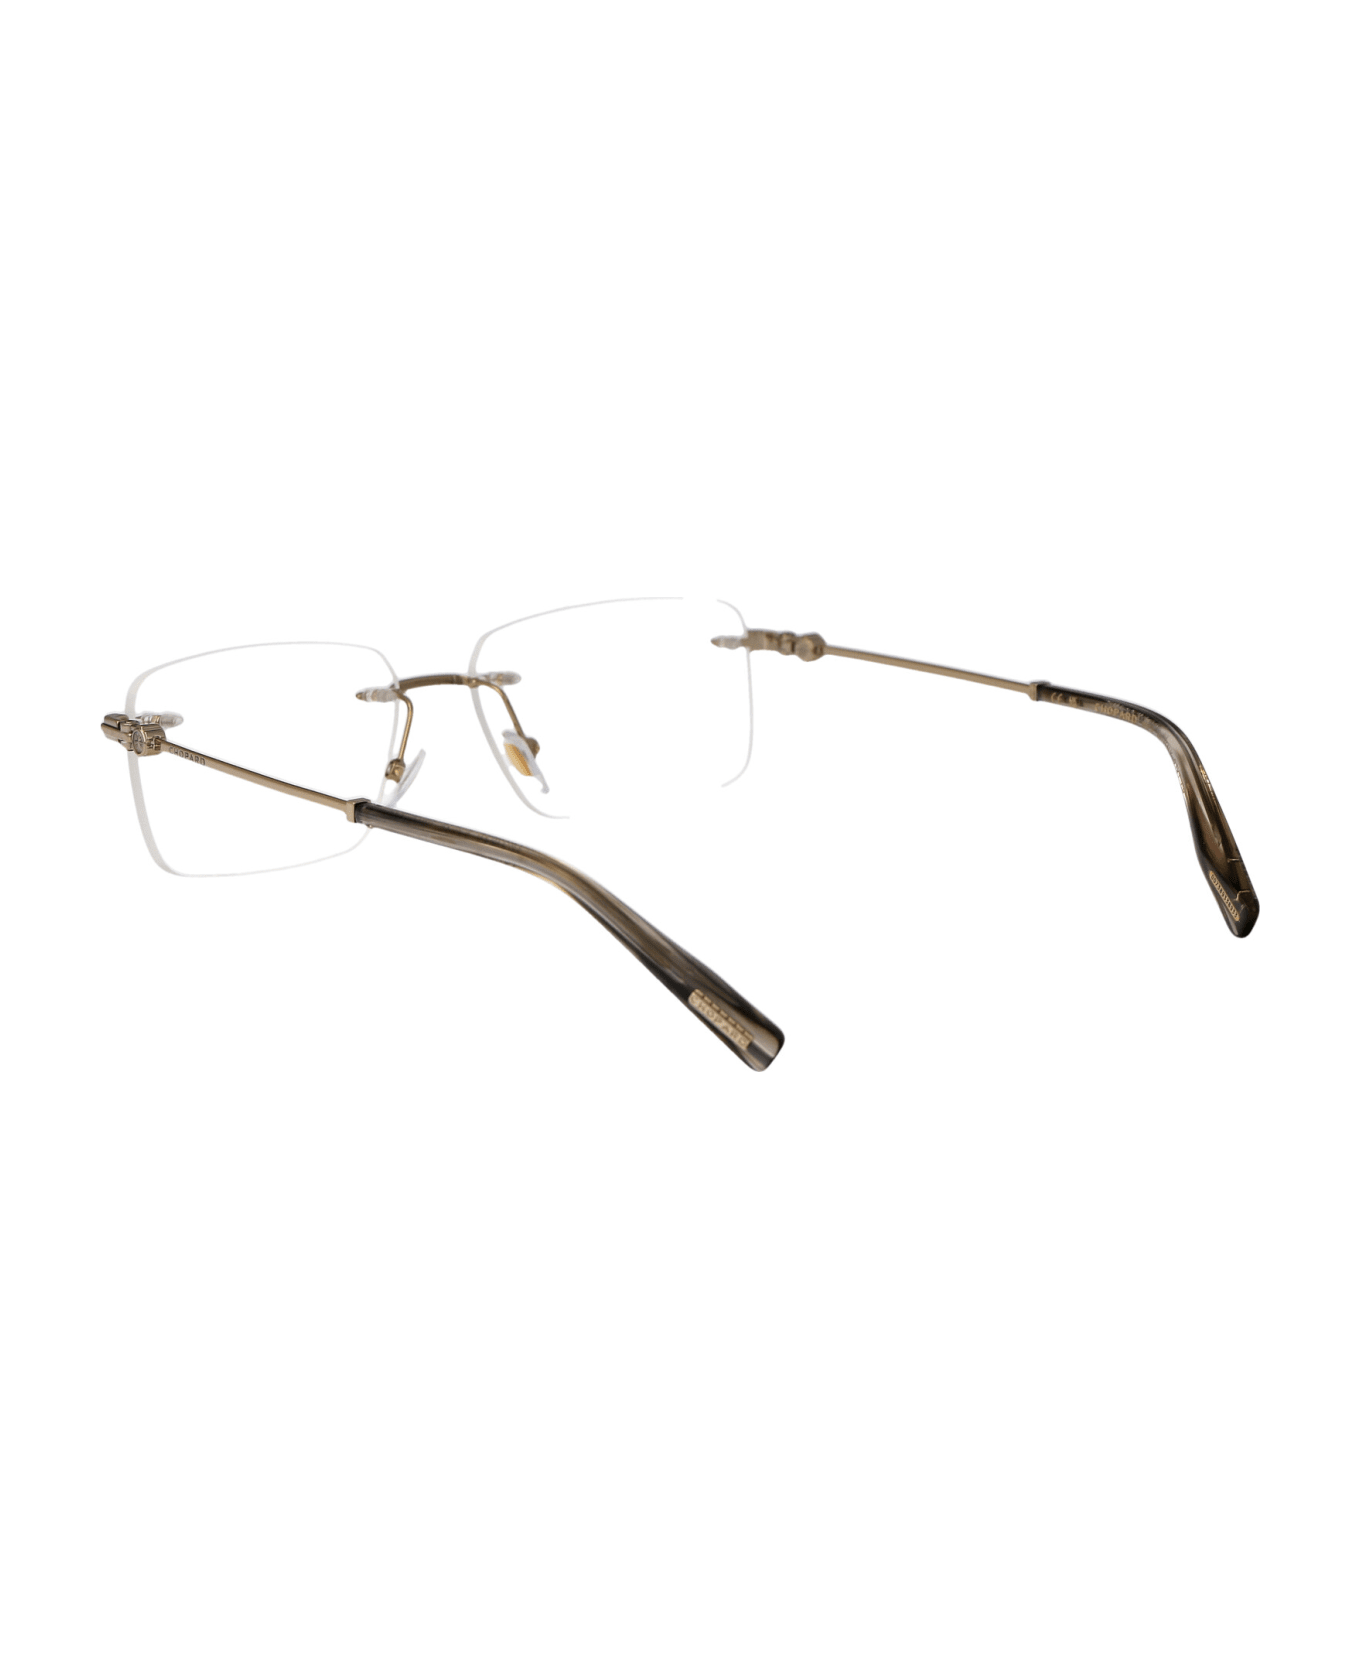 Chopard Vchg39 Glasses - 08FF ORO GRIGIO LUCIDO アイウェア